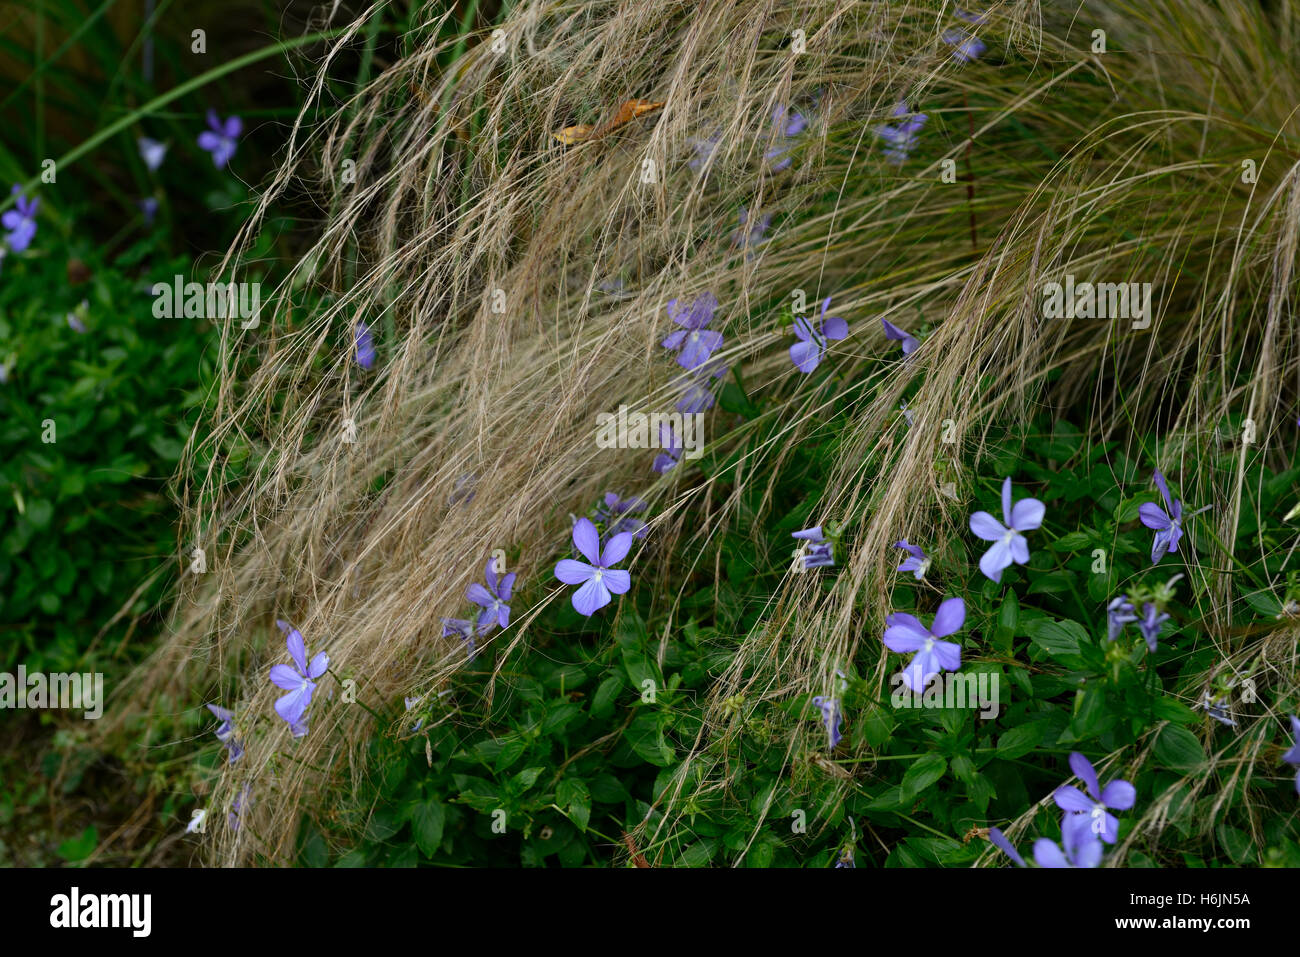 viola cornuta boughton blue stipa tenuissima violets ornamental grass grasses mix mixed planting scheme bed border RM floral Stock Photo